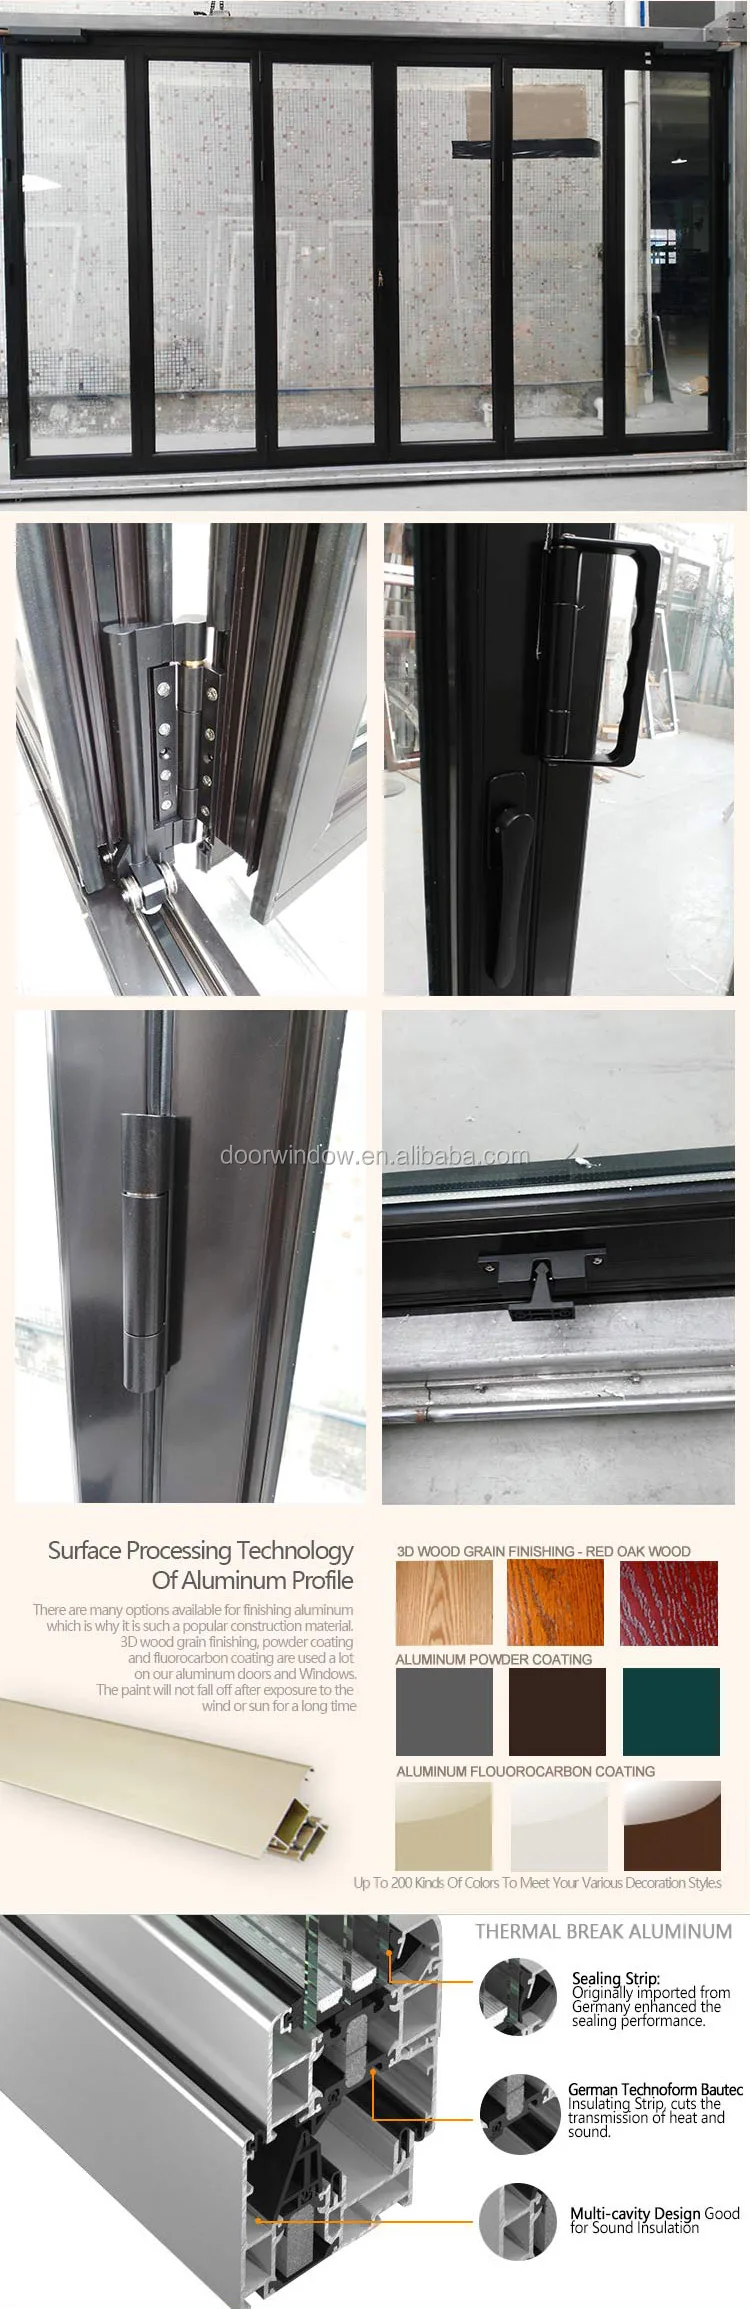 Folding frame cabinet doors pool fencing